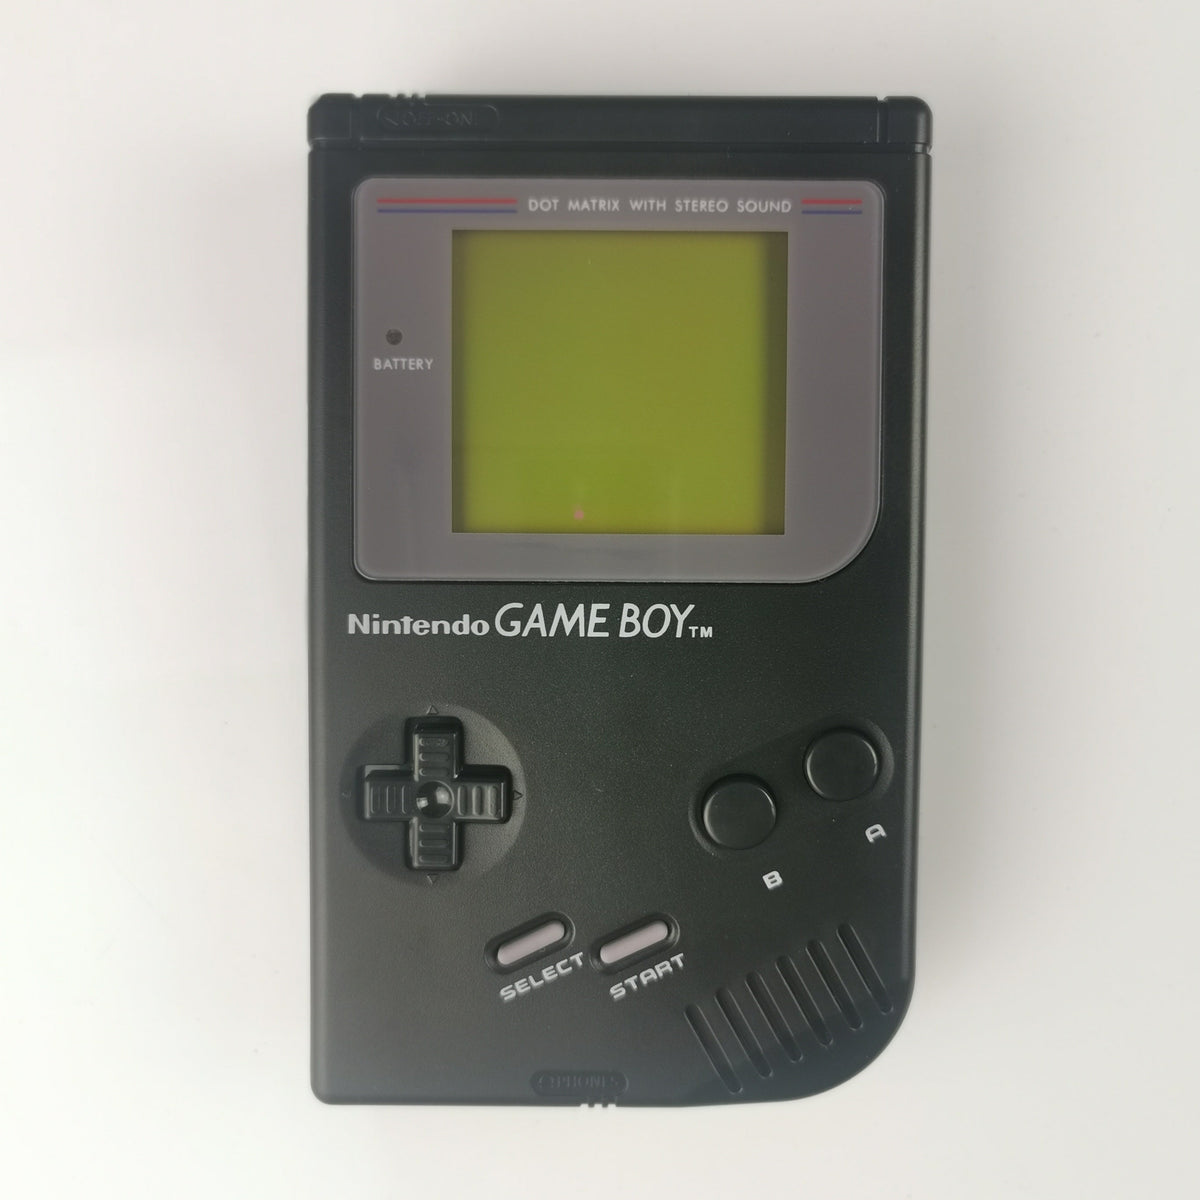 Nintendo GameBoy Classic Black Jack[GB]